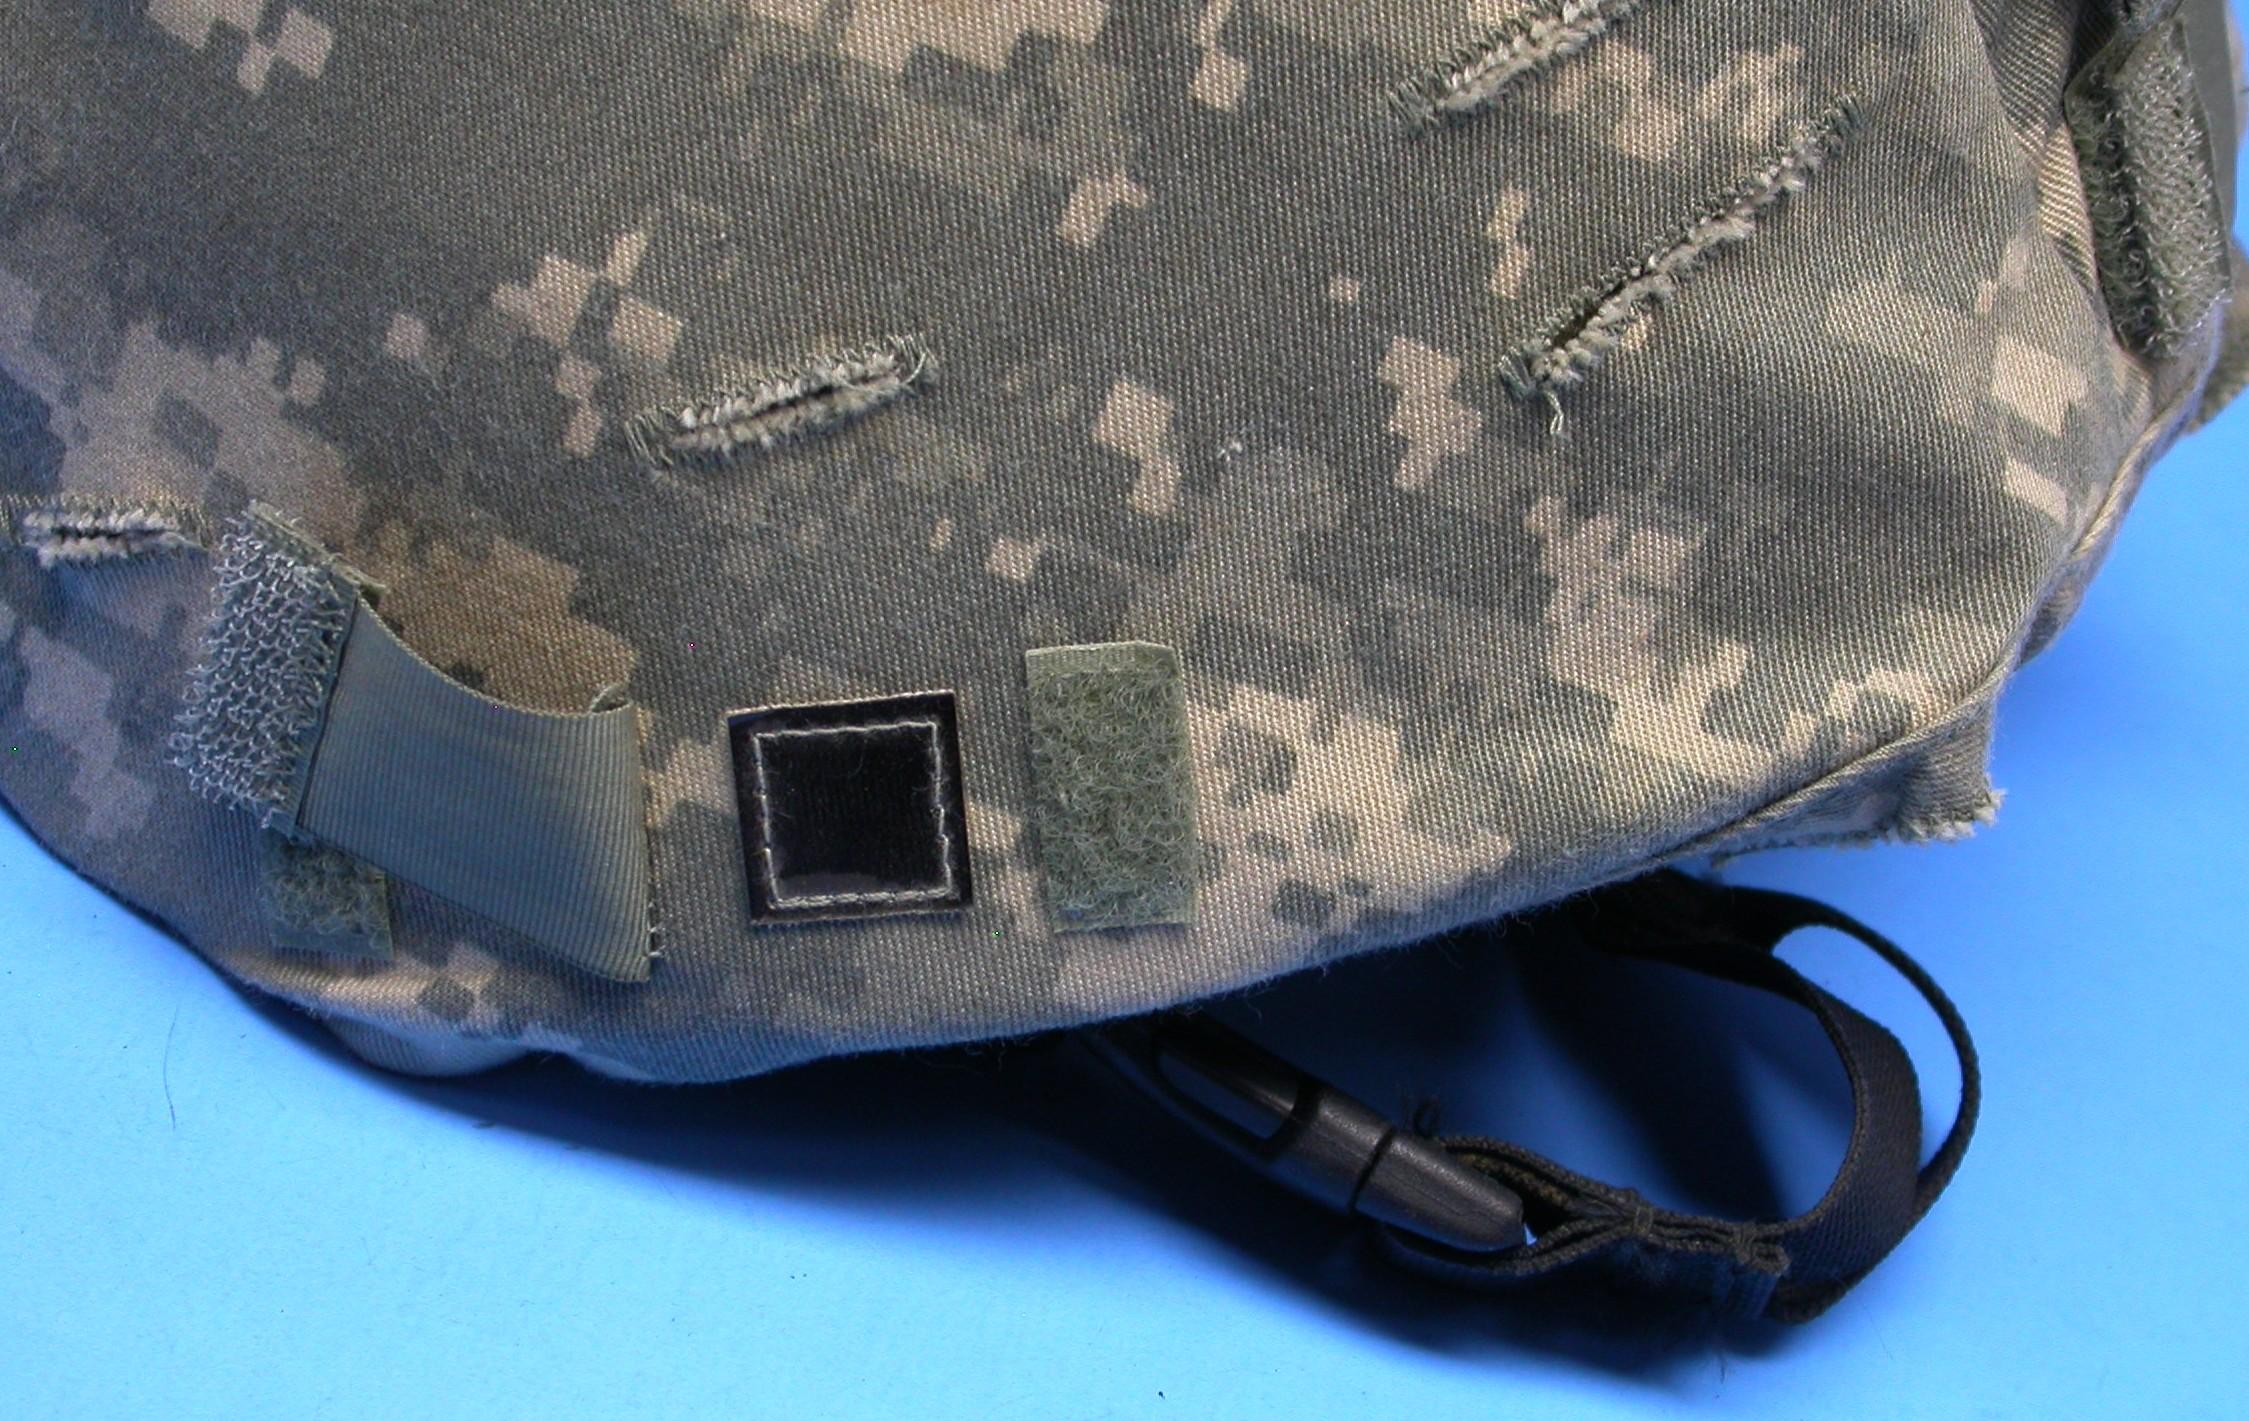 US Army PASGT BLU-Upgrade Ballistic Helmet & ACU Camo Cover (HBB)